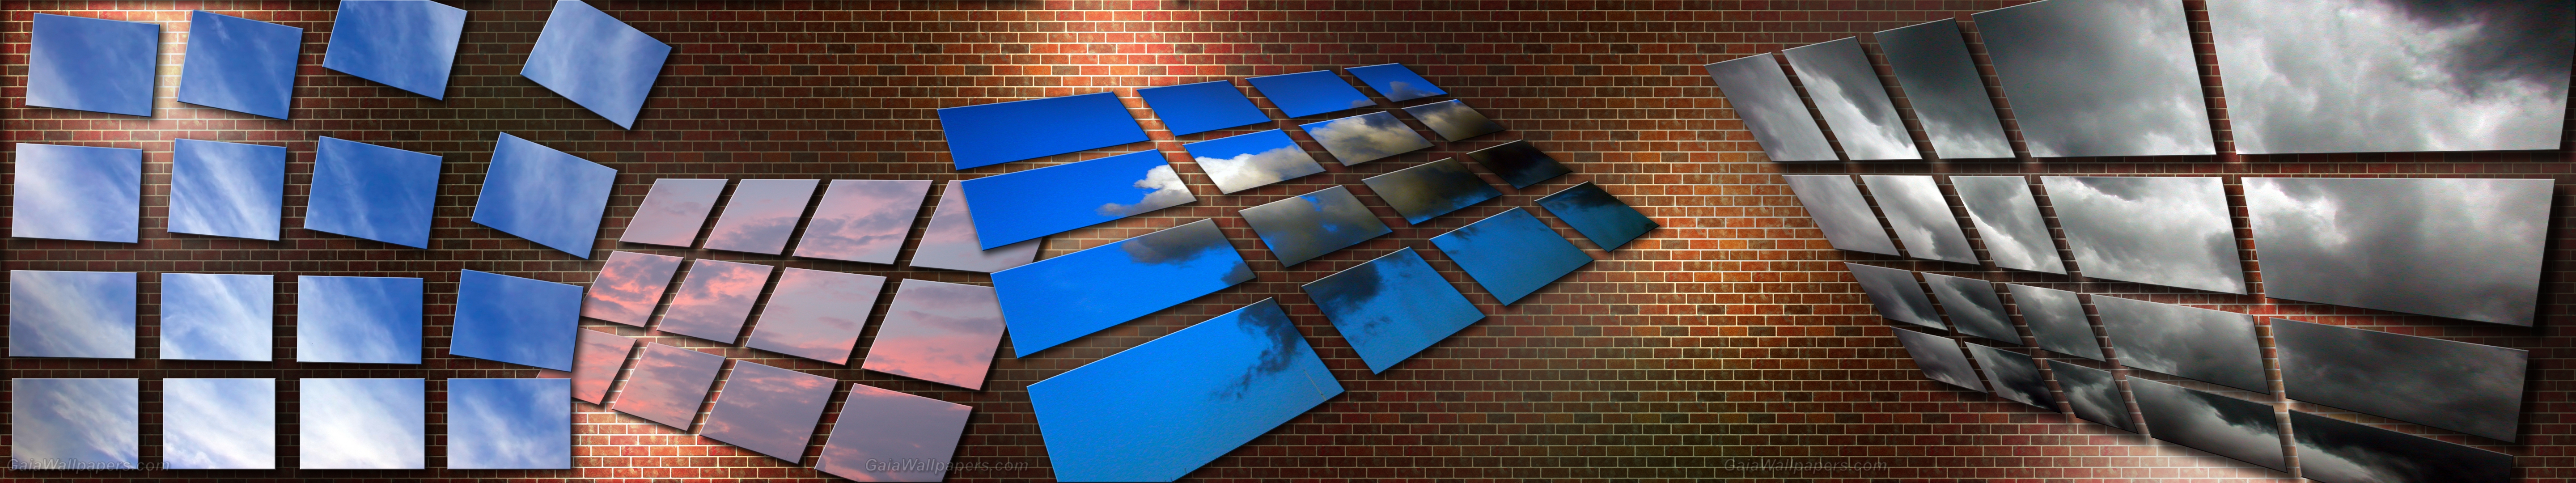 Ciels virtuels sur un mur de briques - Fonds d'écran gratuits